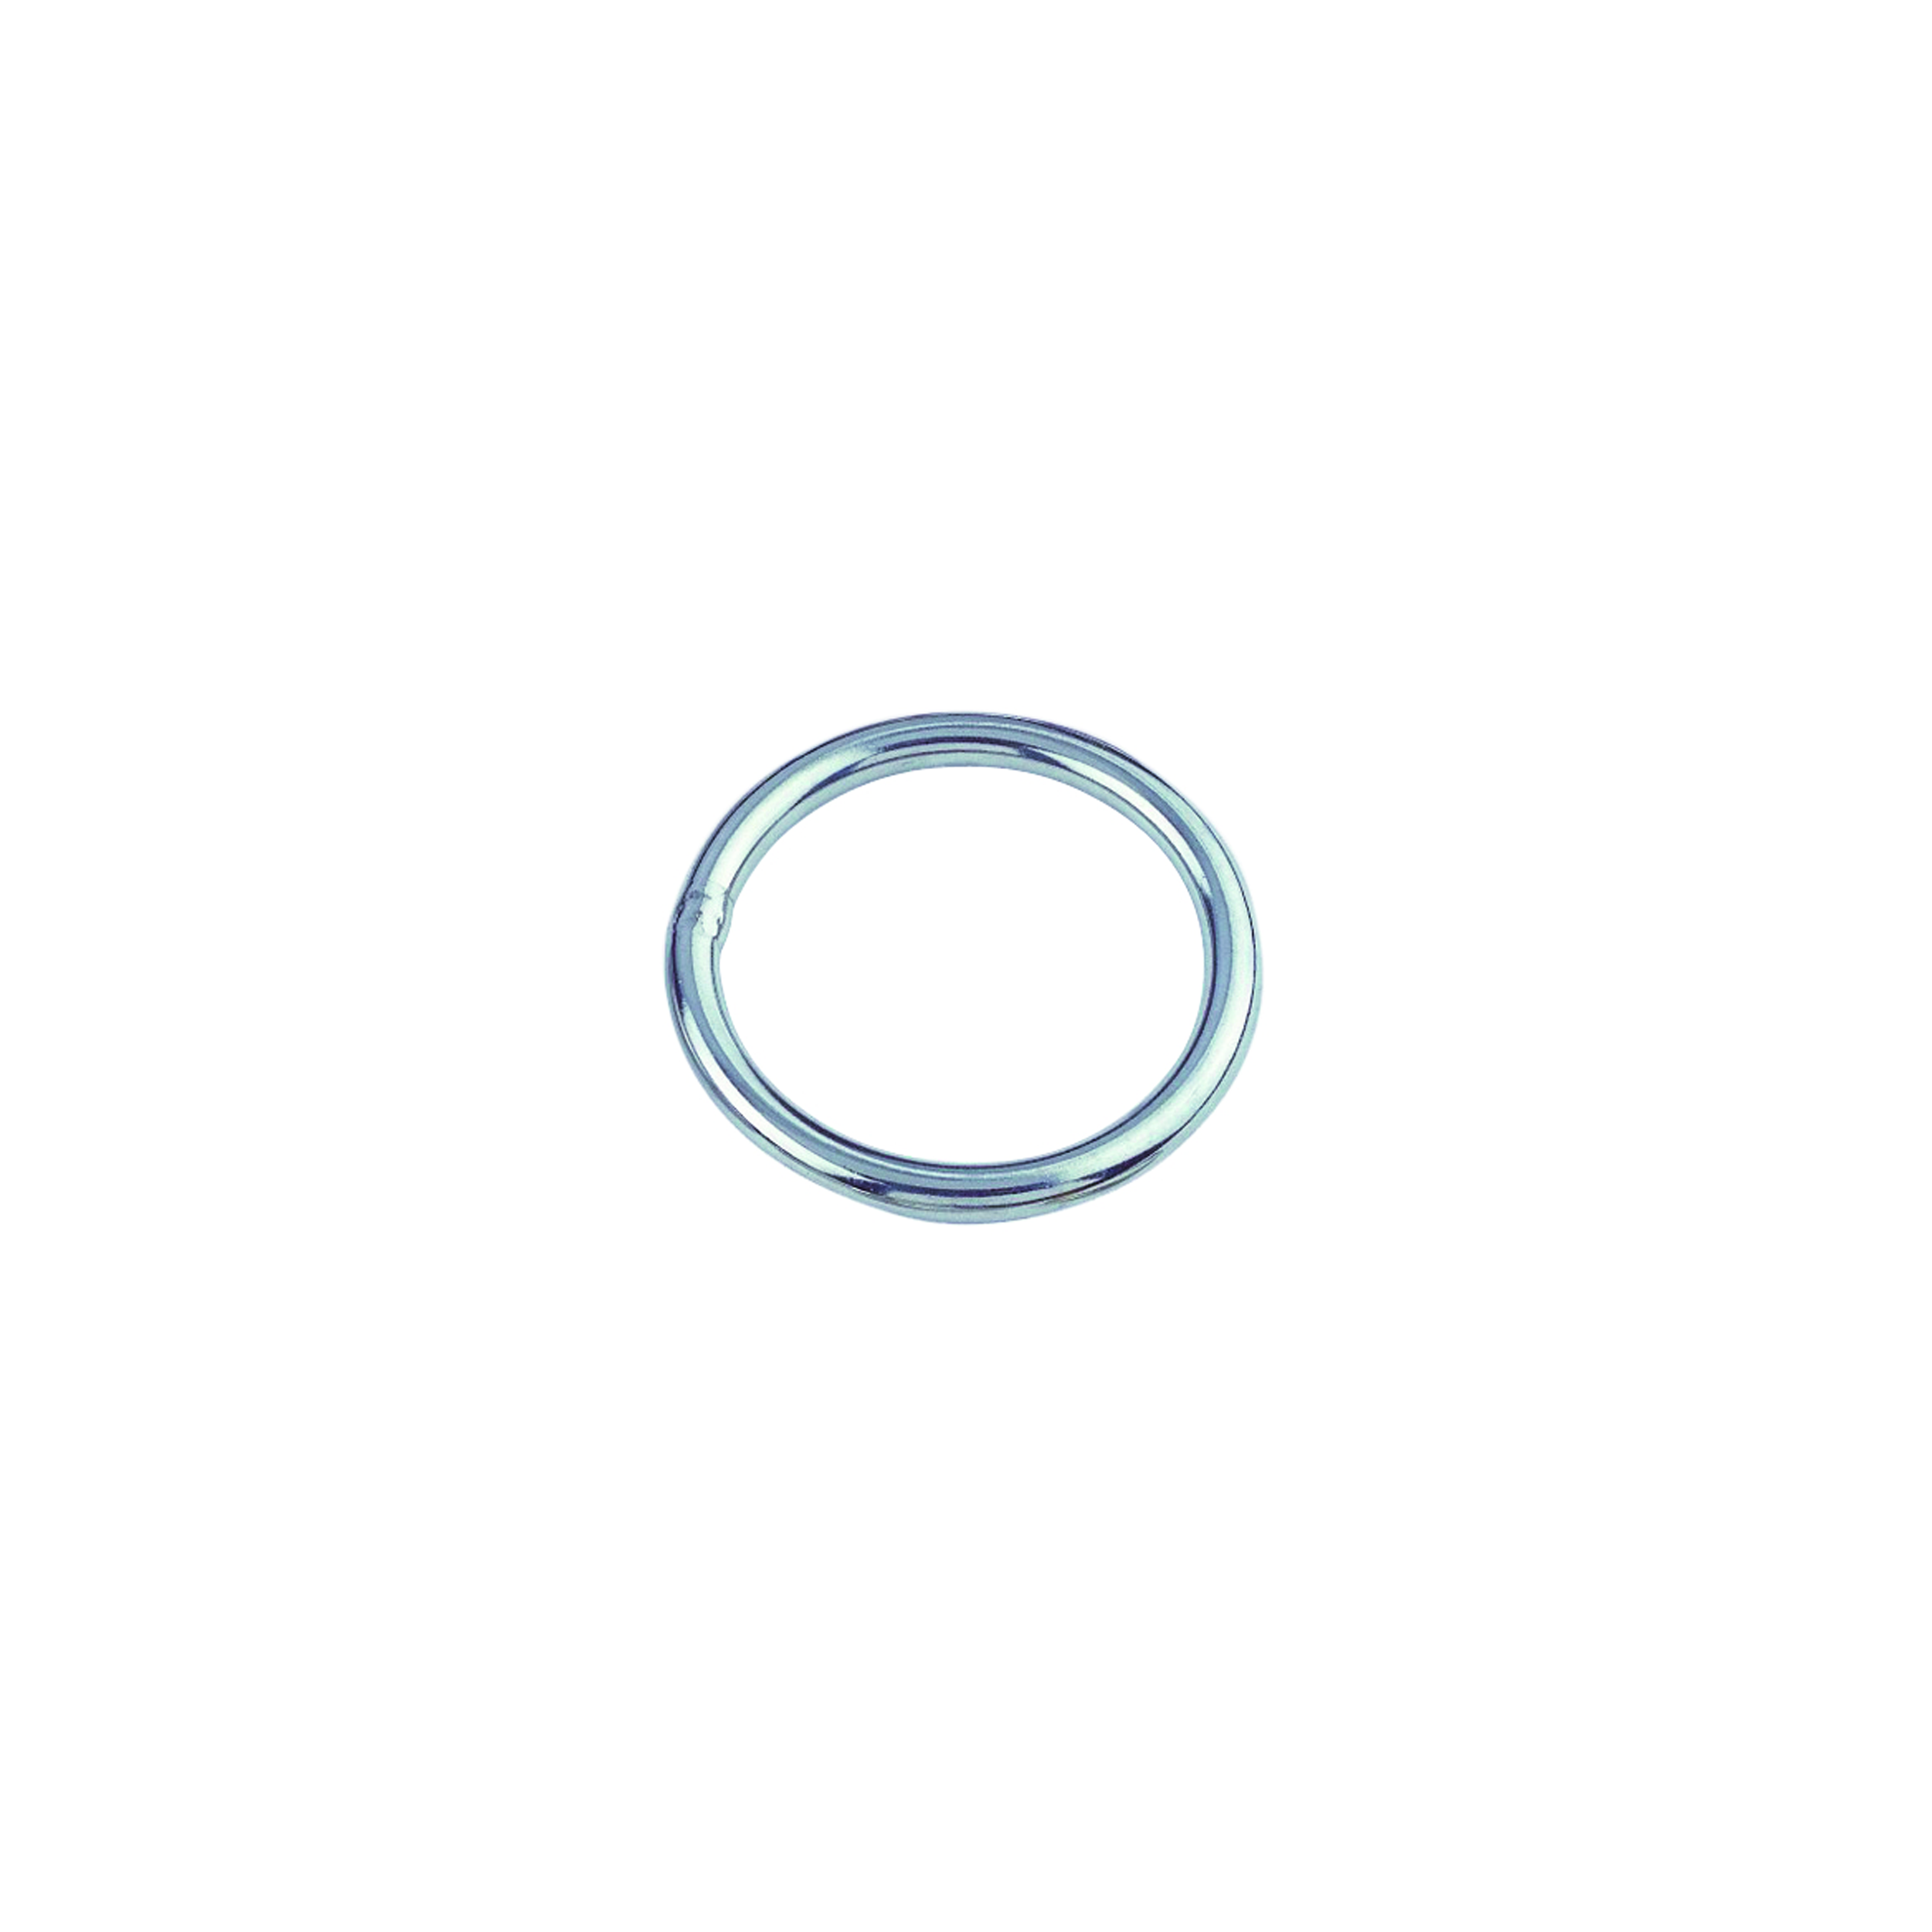 50 STCK / PCS. Ring, round A4  3x25mm